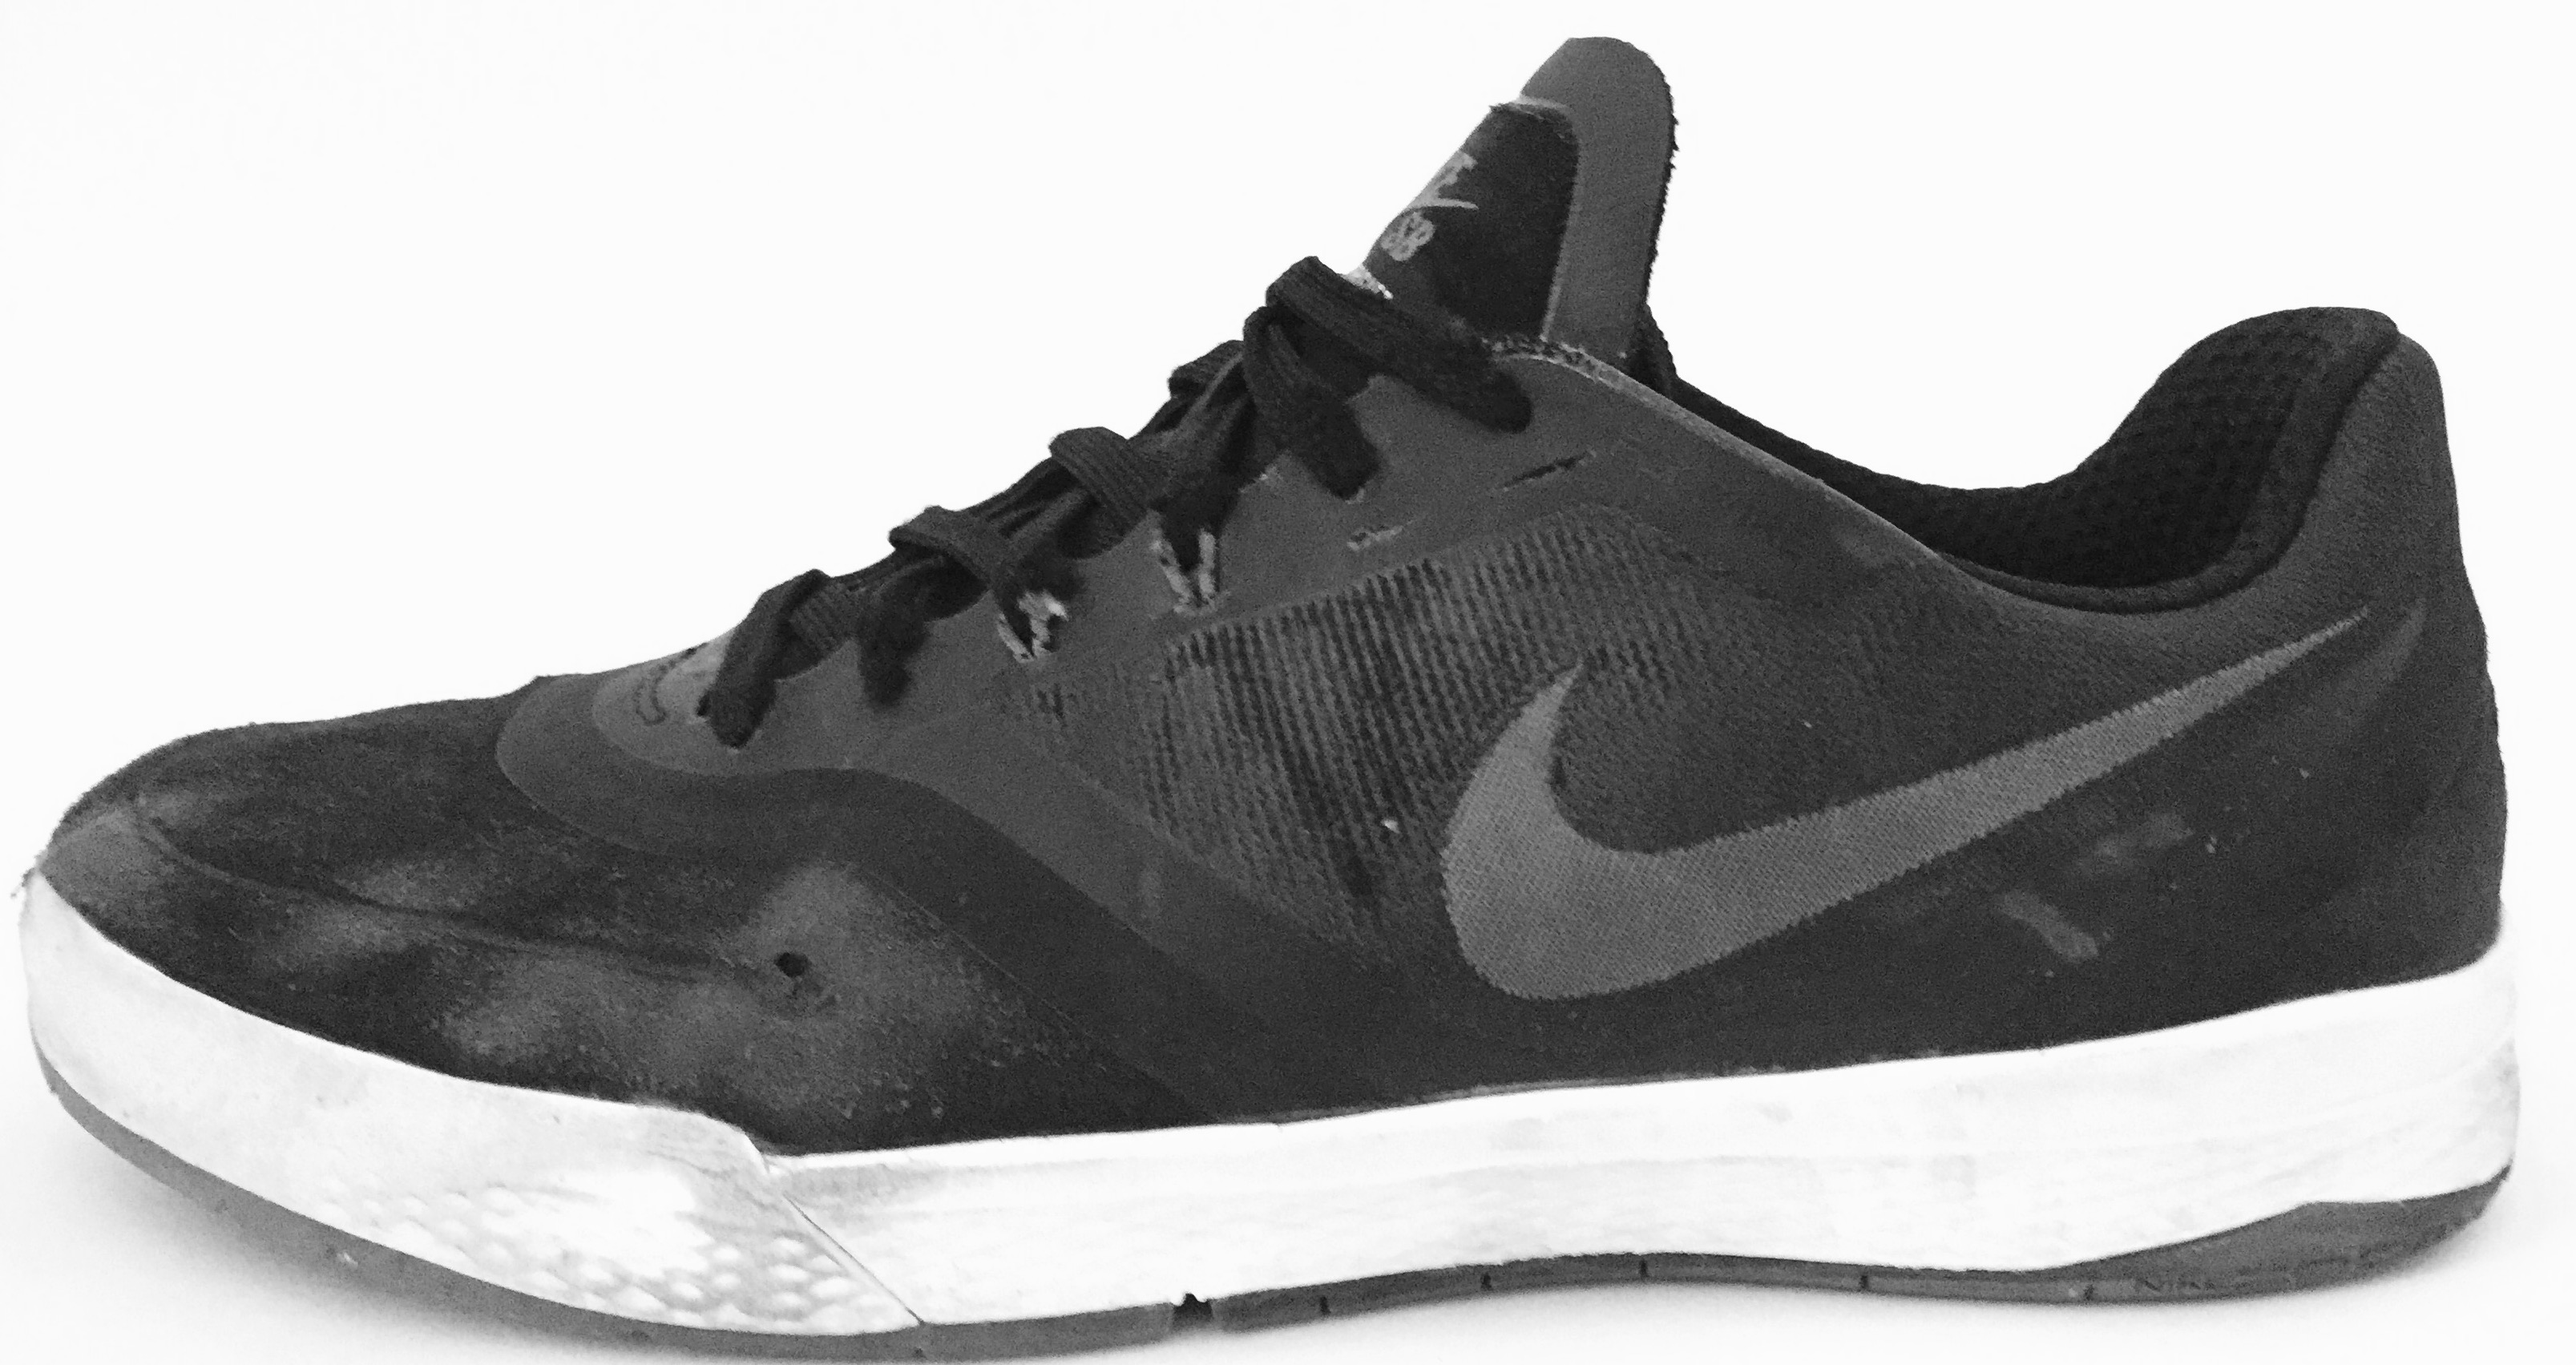 Bestrating vriendschap Zogenaamd Nike SB Paul Rodriguez P-Rod 9 - Weartested - detailed skate shoe reviews